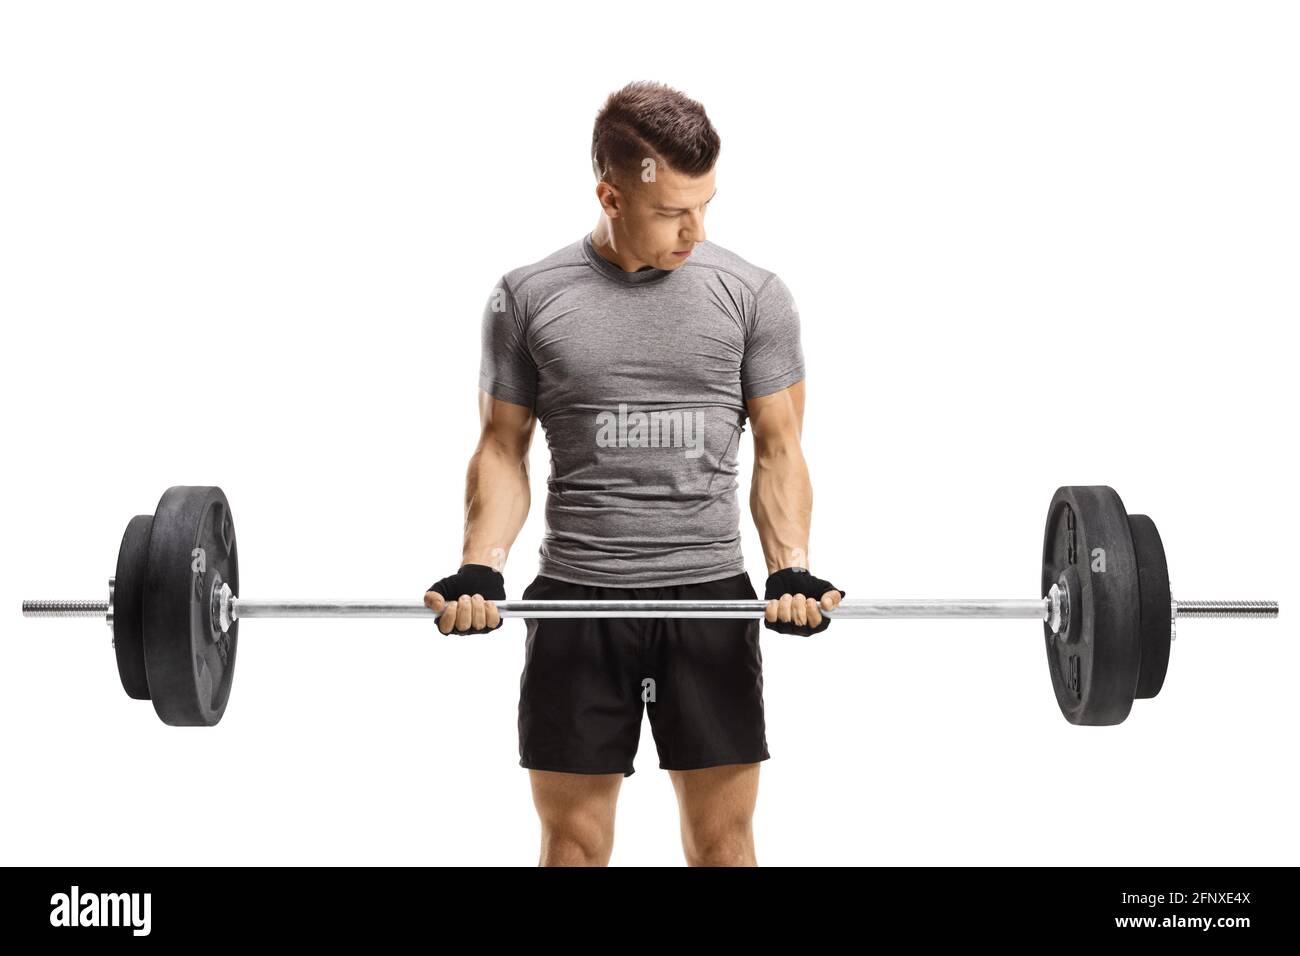 Guy lifting weights isolated on white background Stock Photo - Alamy